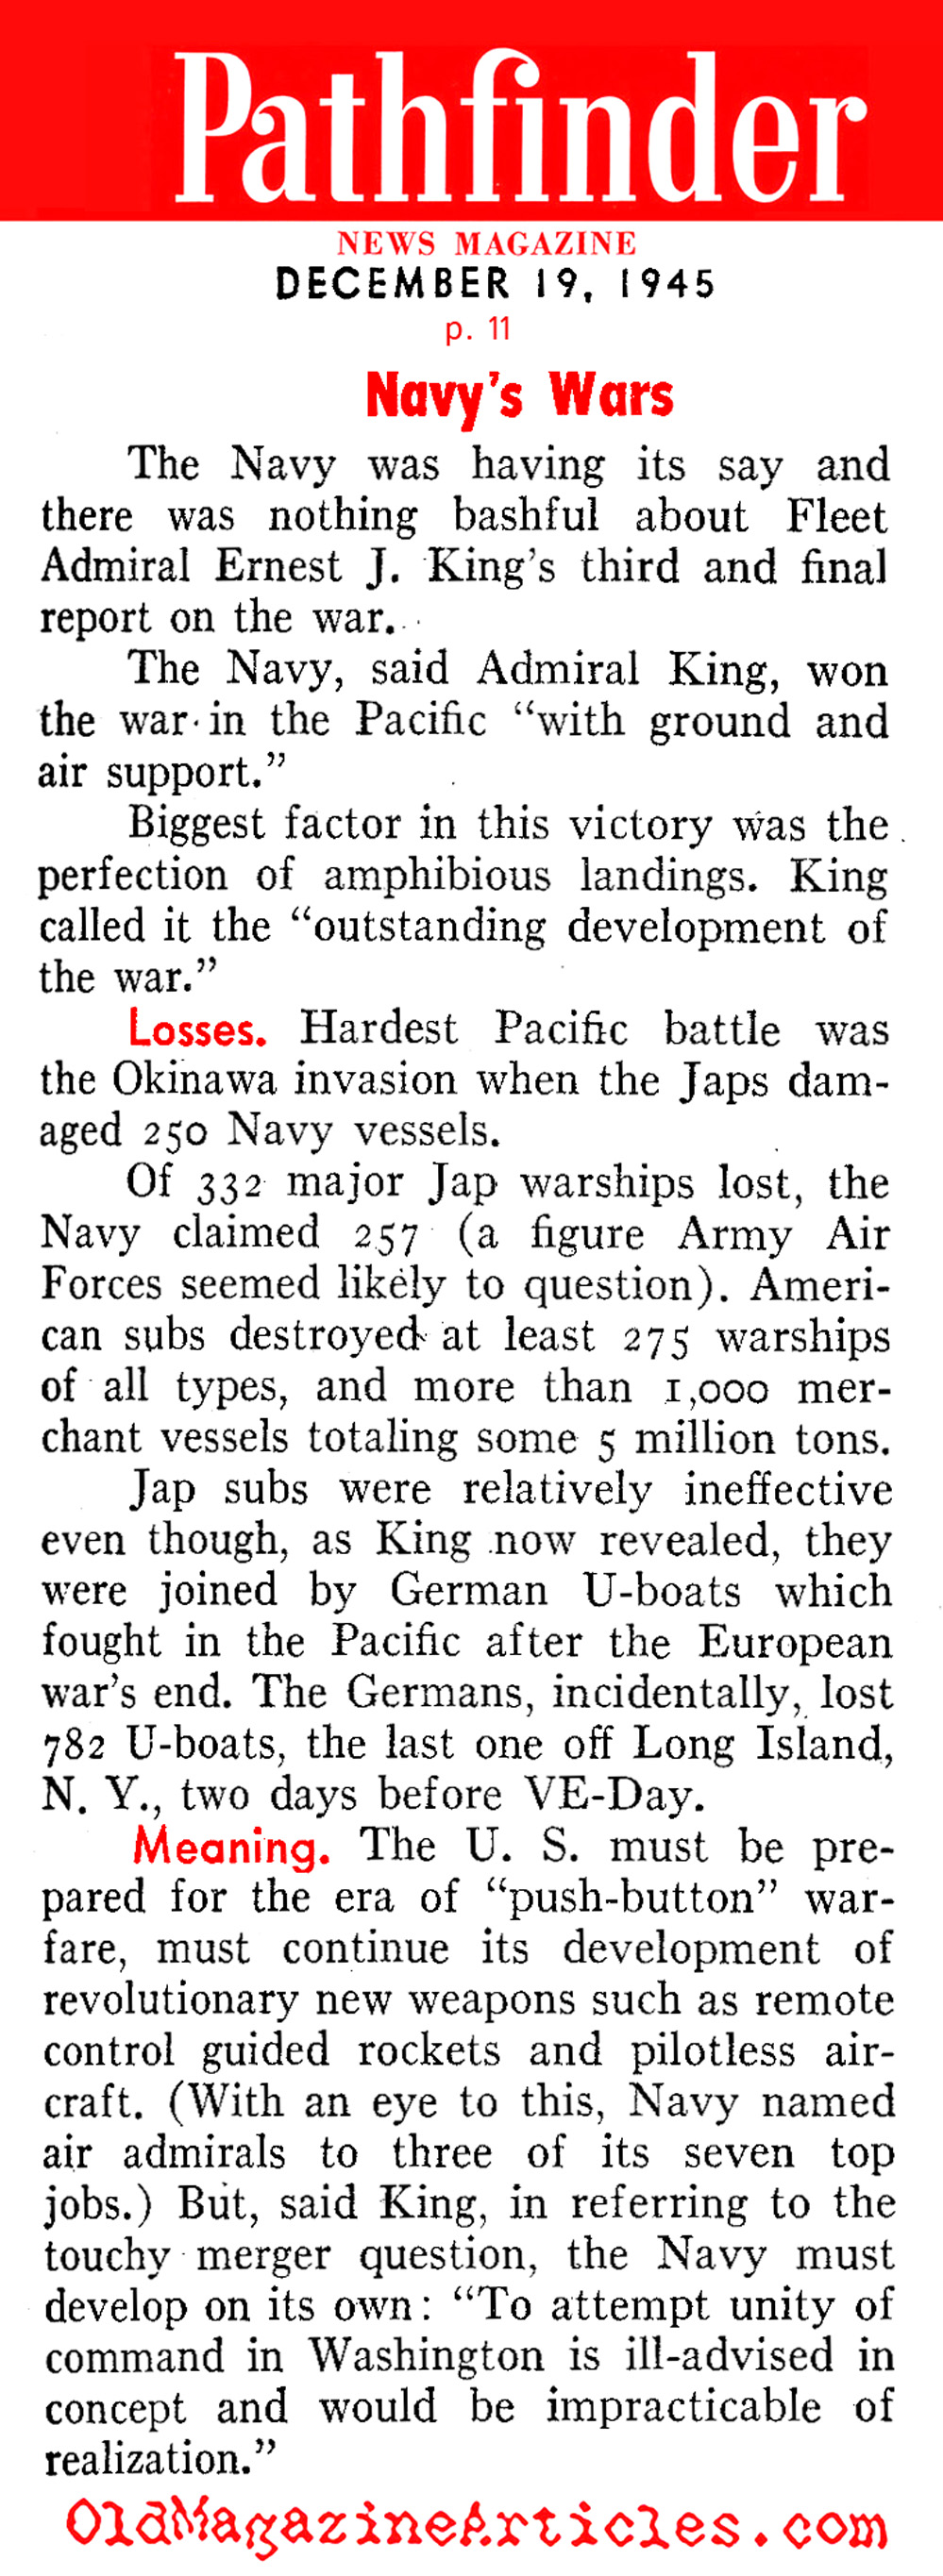 Assessing the U.S. Navy in W.W. II (Pathfinder Magazine, 1945)